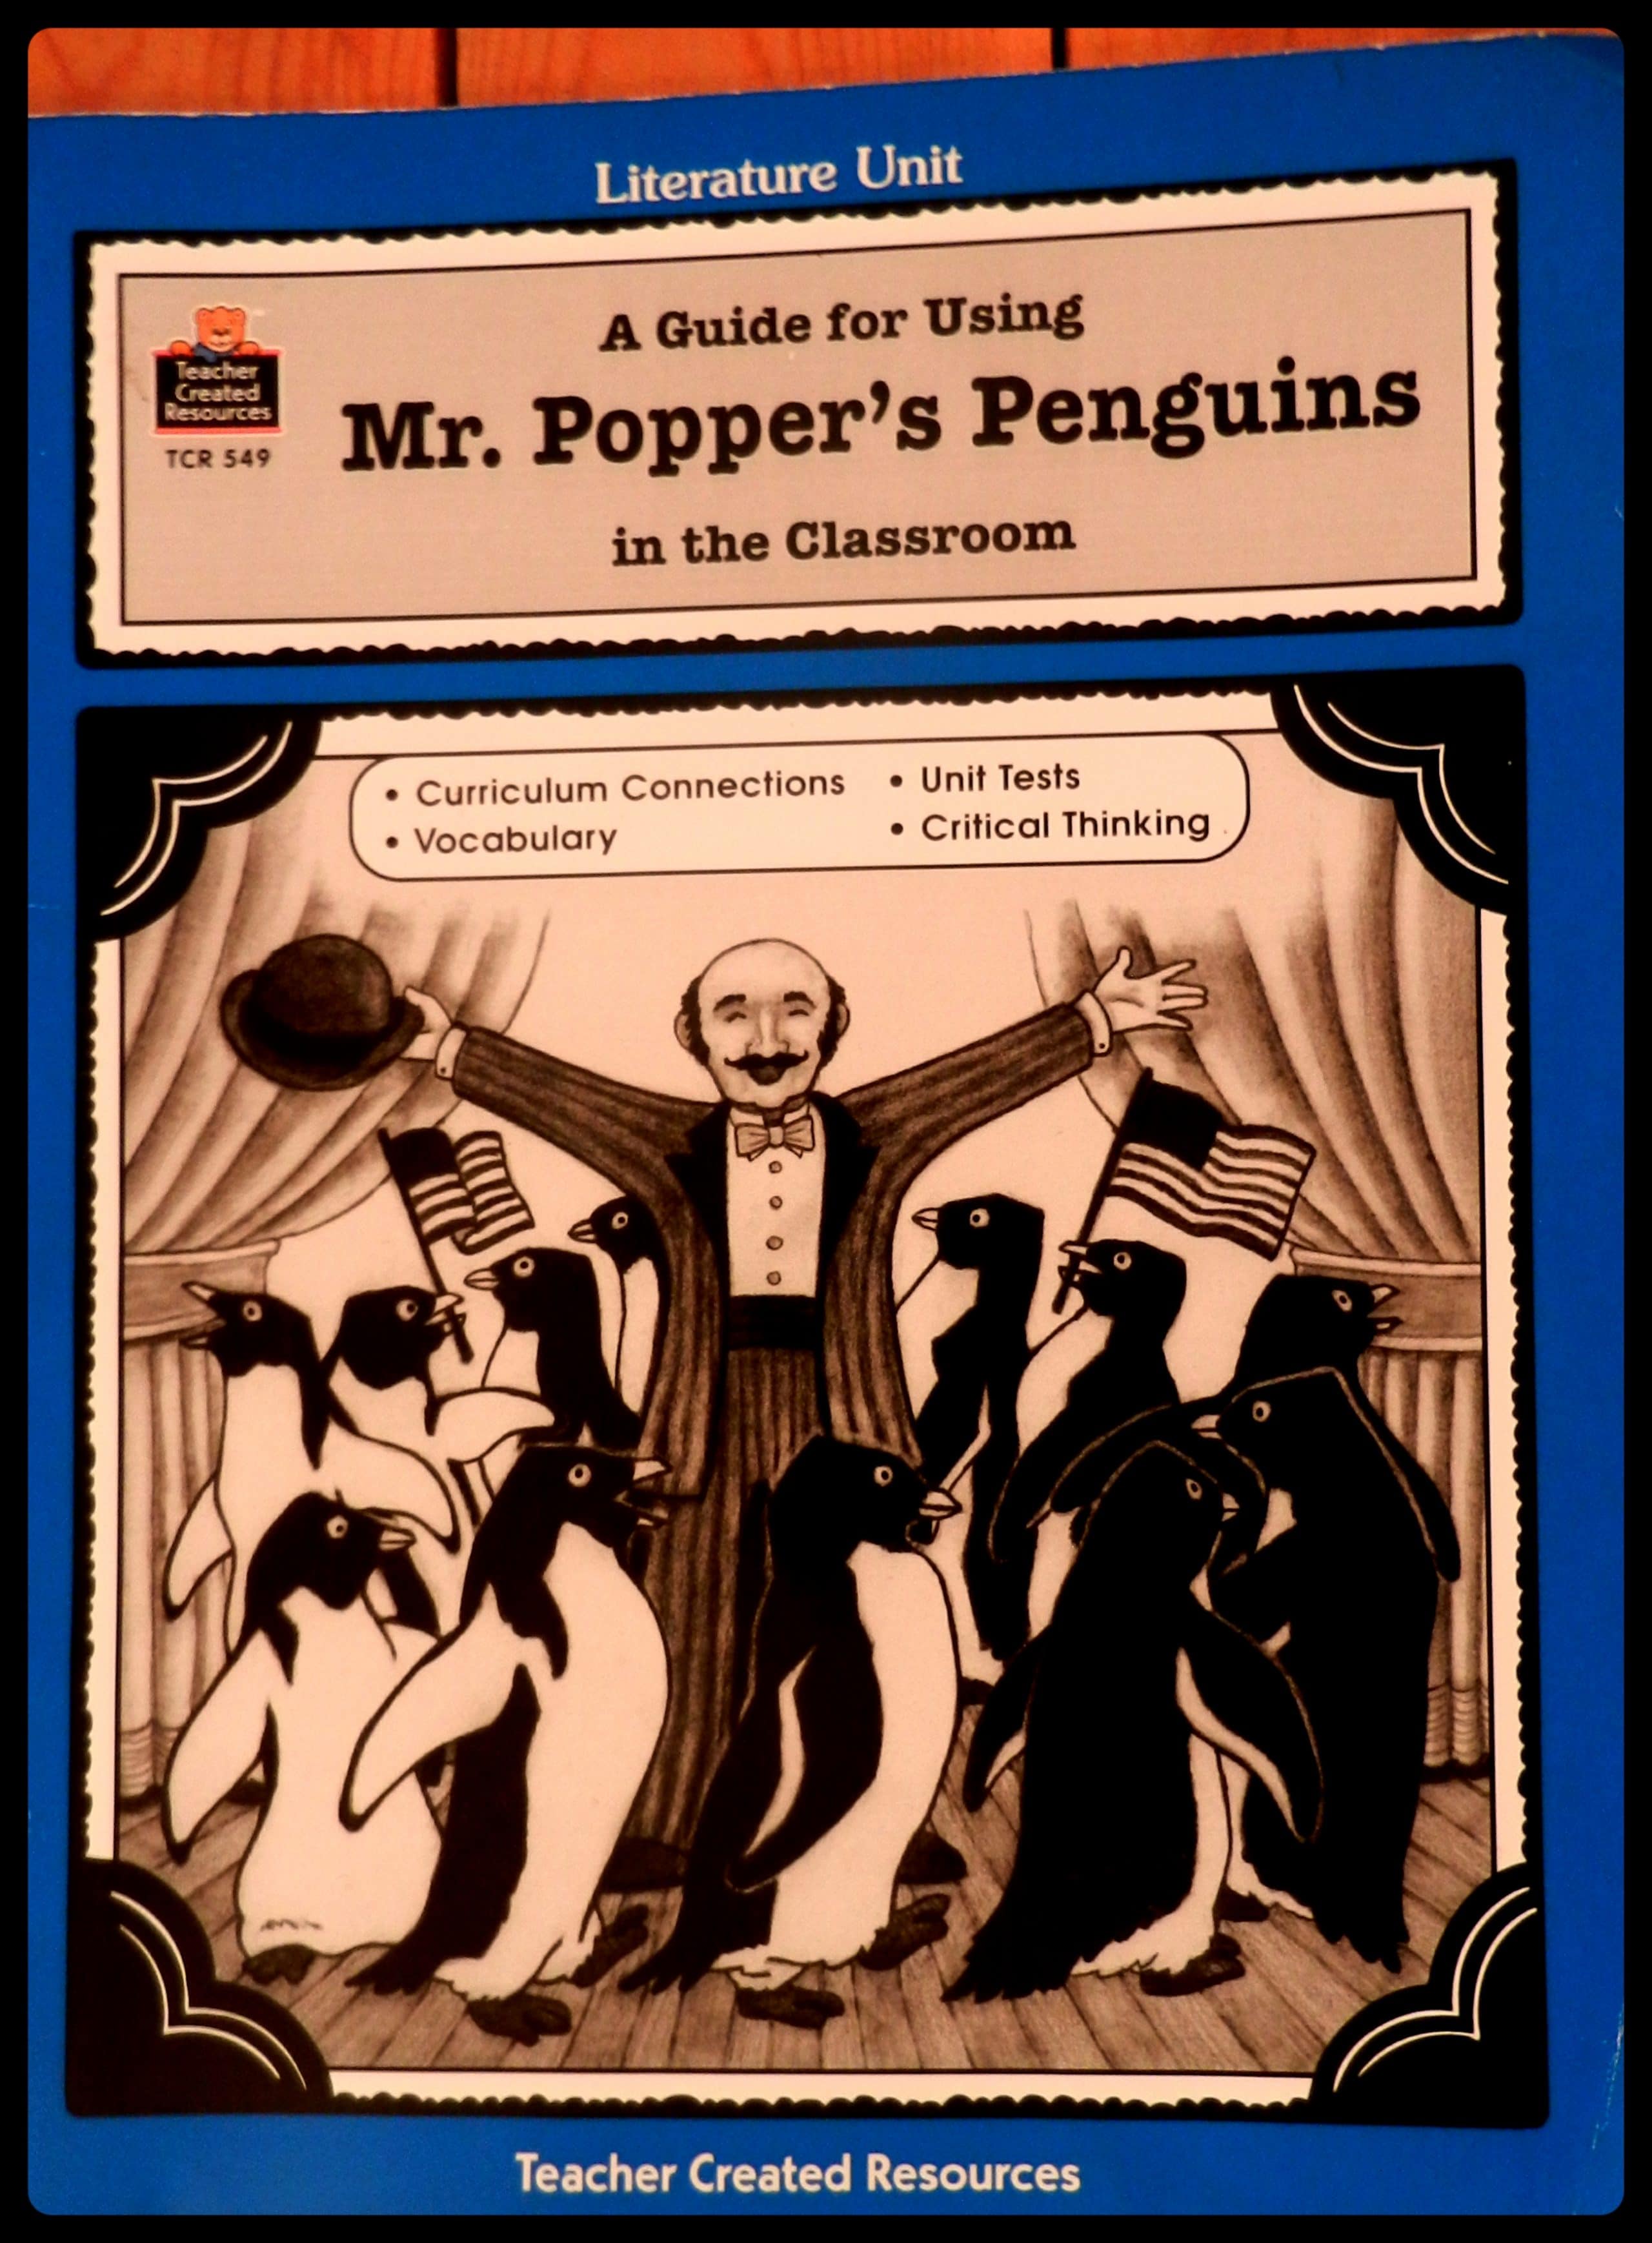 Mr. Popper’s Penguins – Literature Guide Review